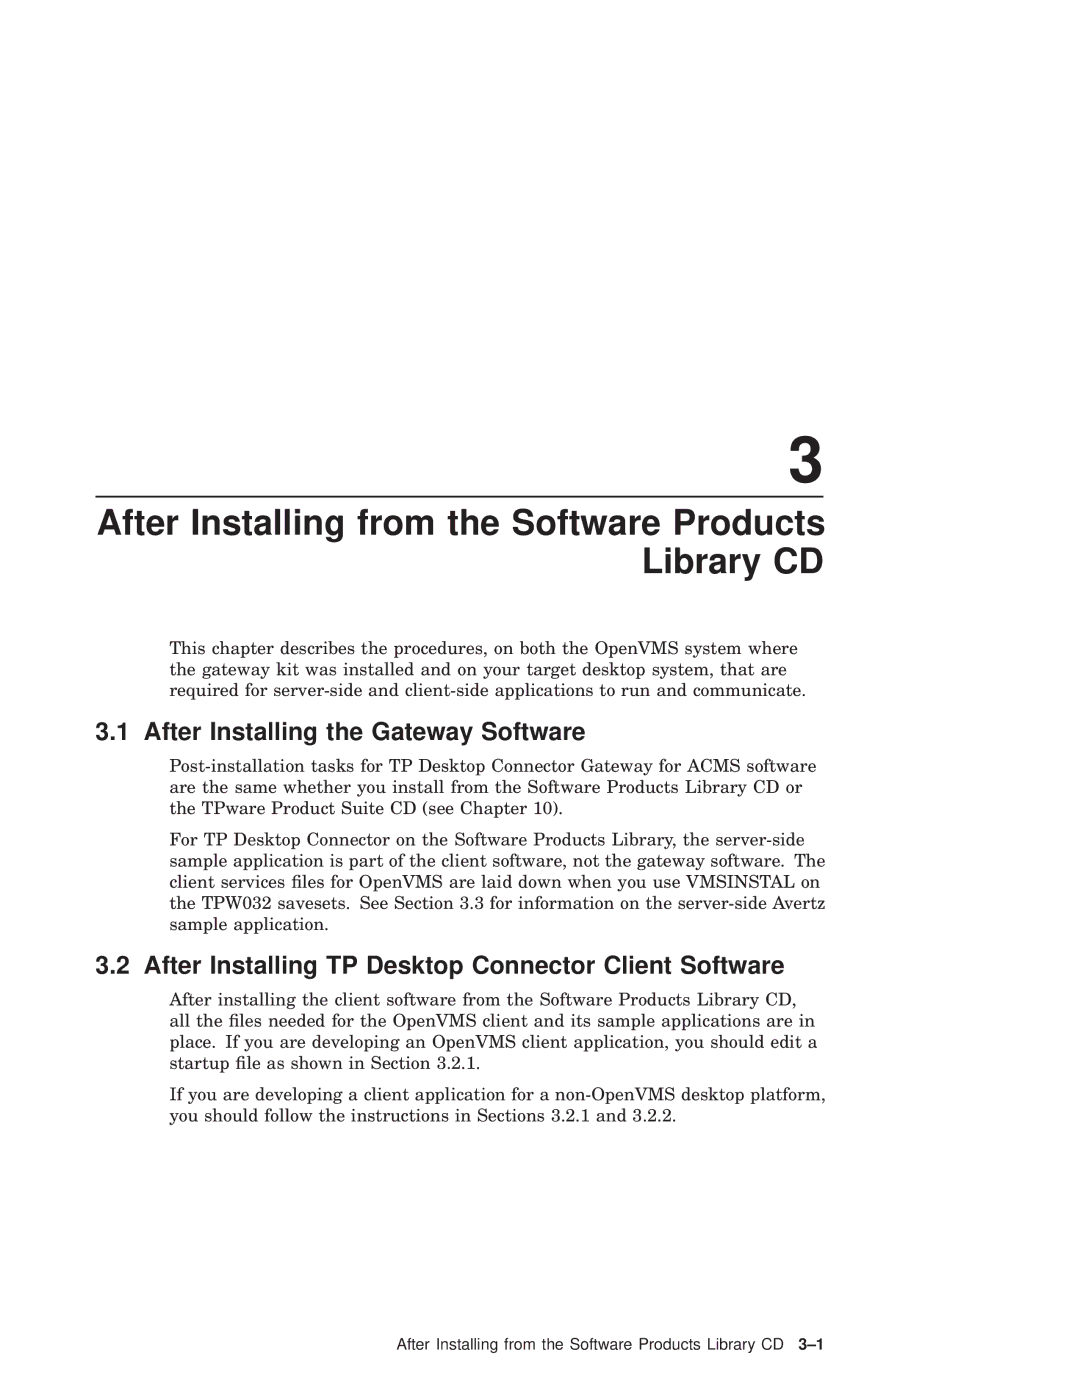 Compaq AAPG9DKTE manual After Installing the Gateway Software, After Installing TP Desktop Connector Client Software 